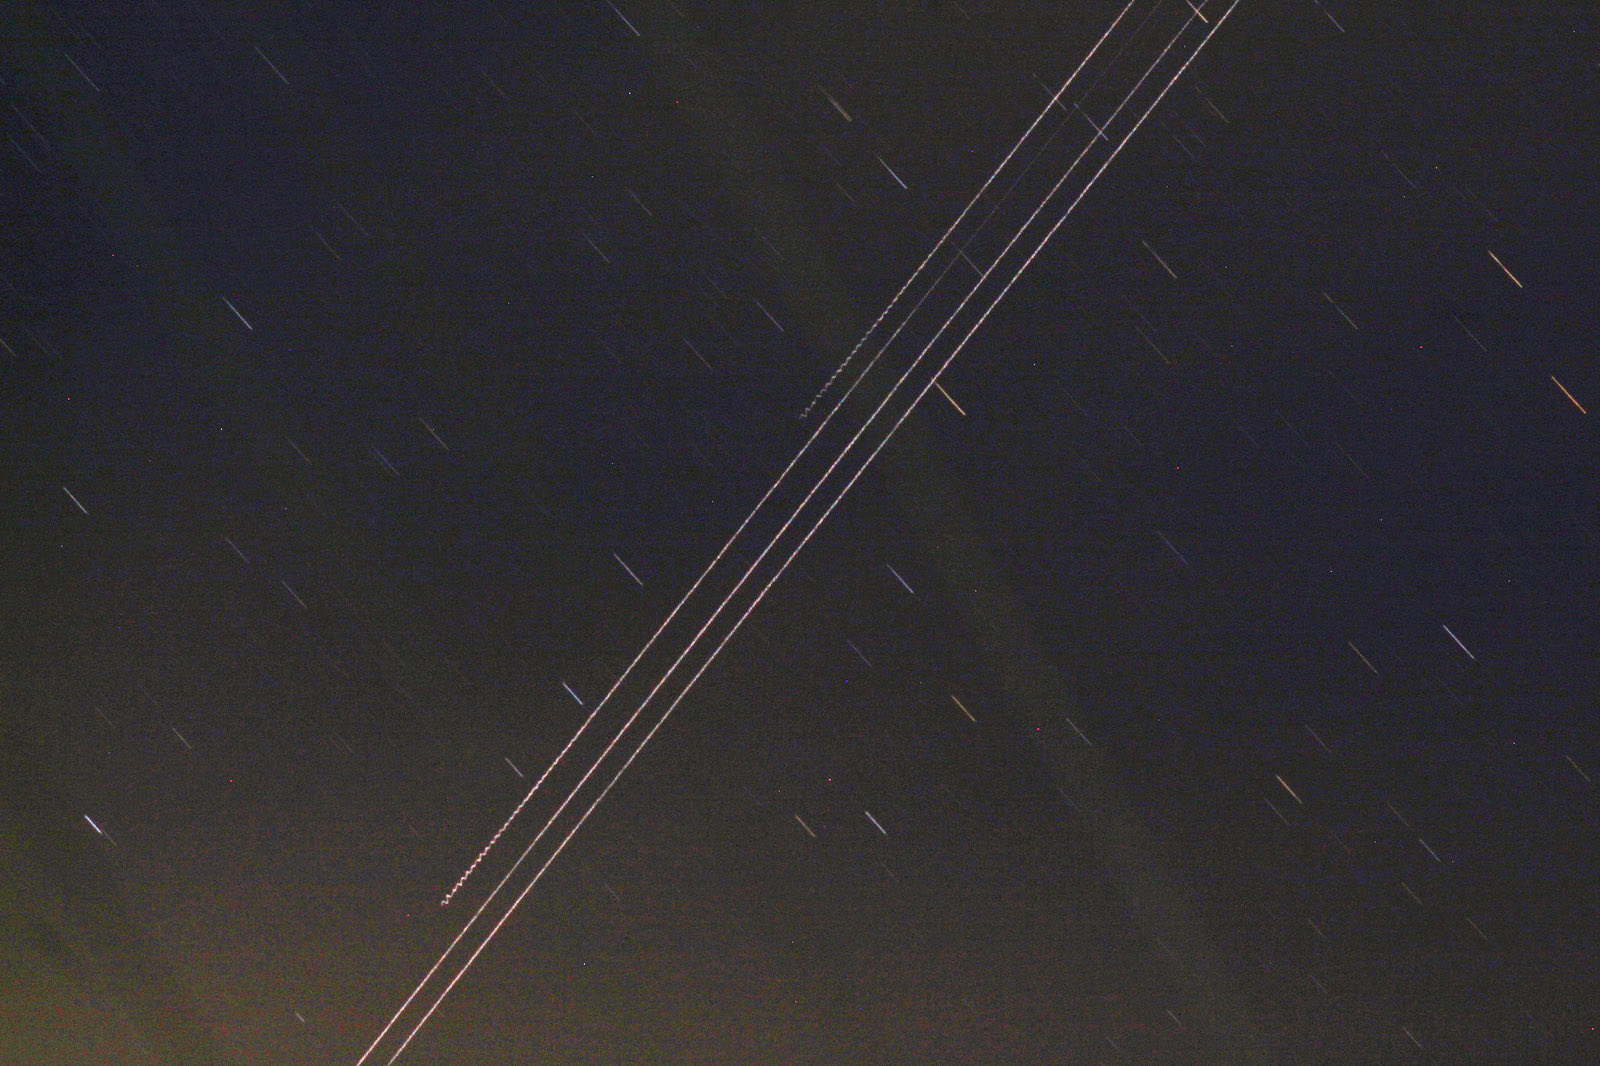 Starlink satellite trails - Dec 4 2020 - Giuseppe Donatiello, Flickr